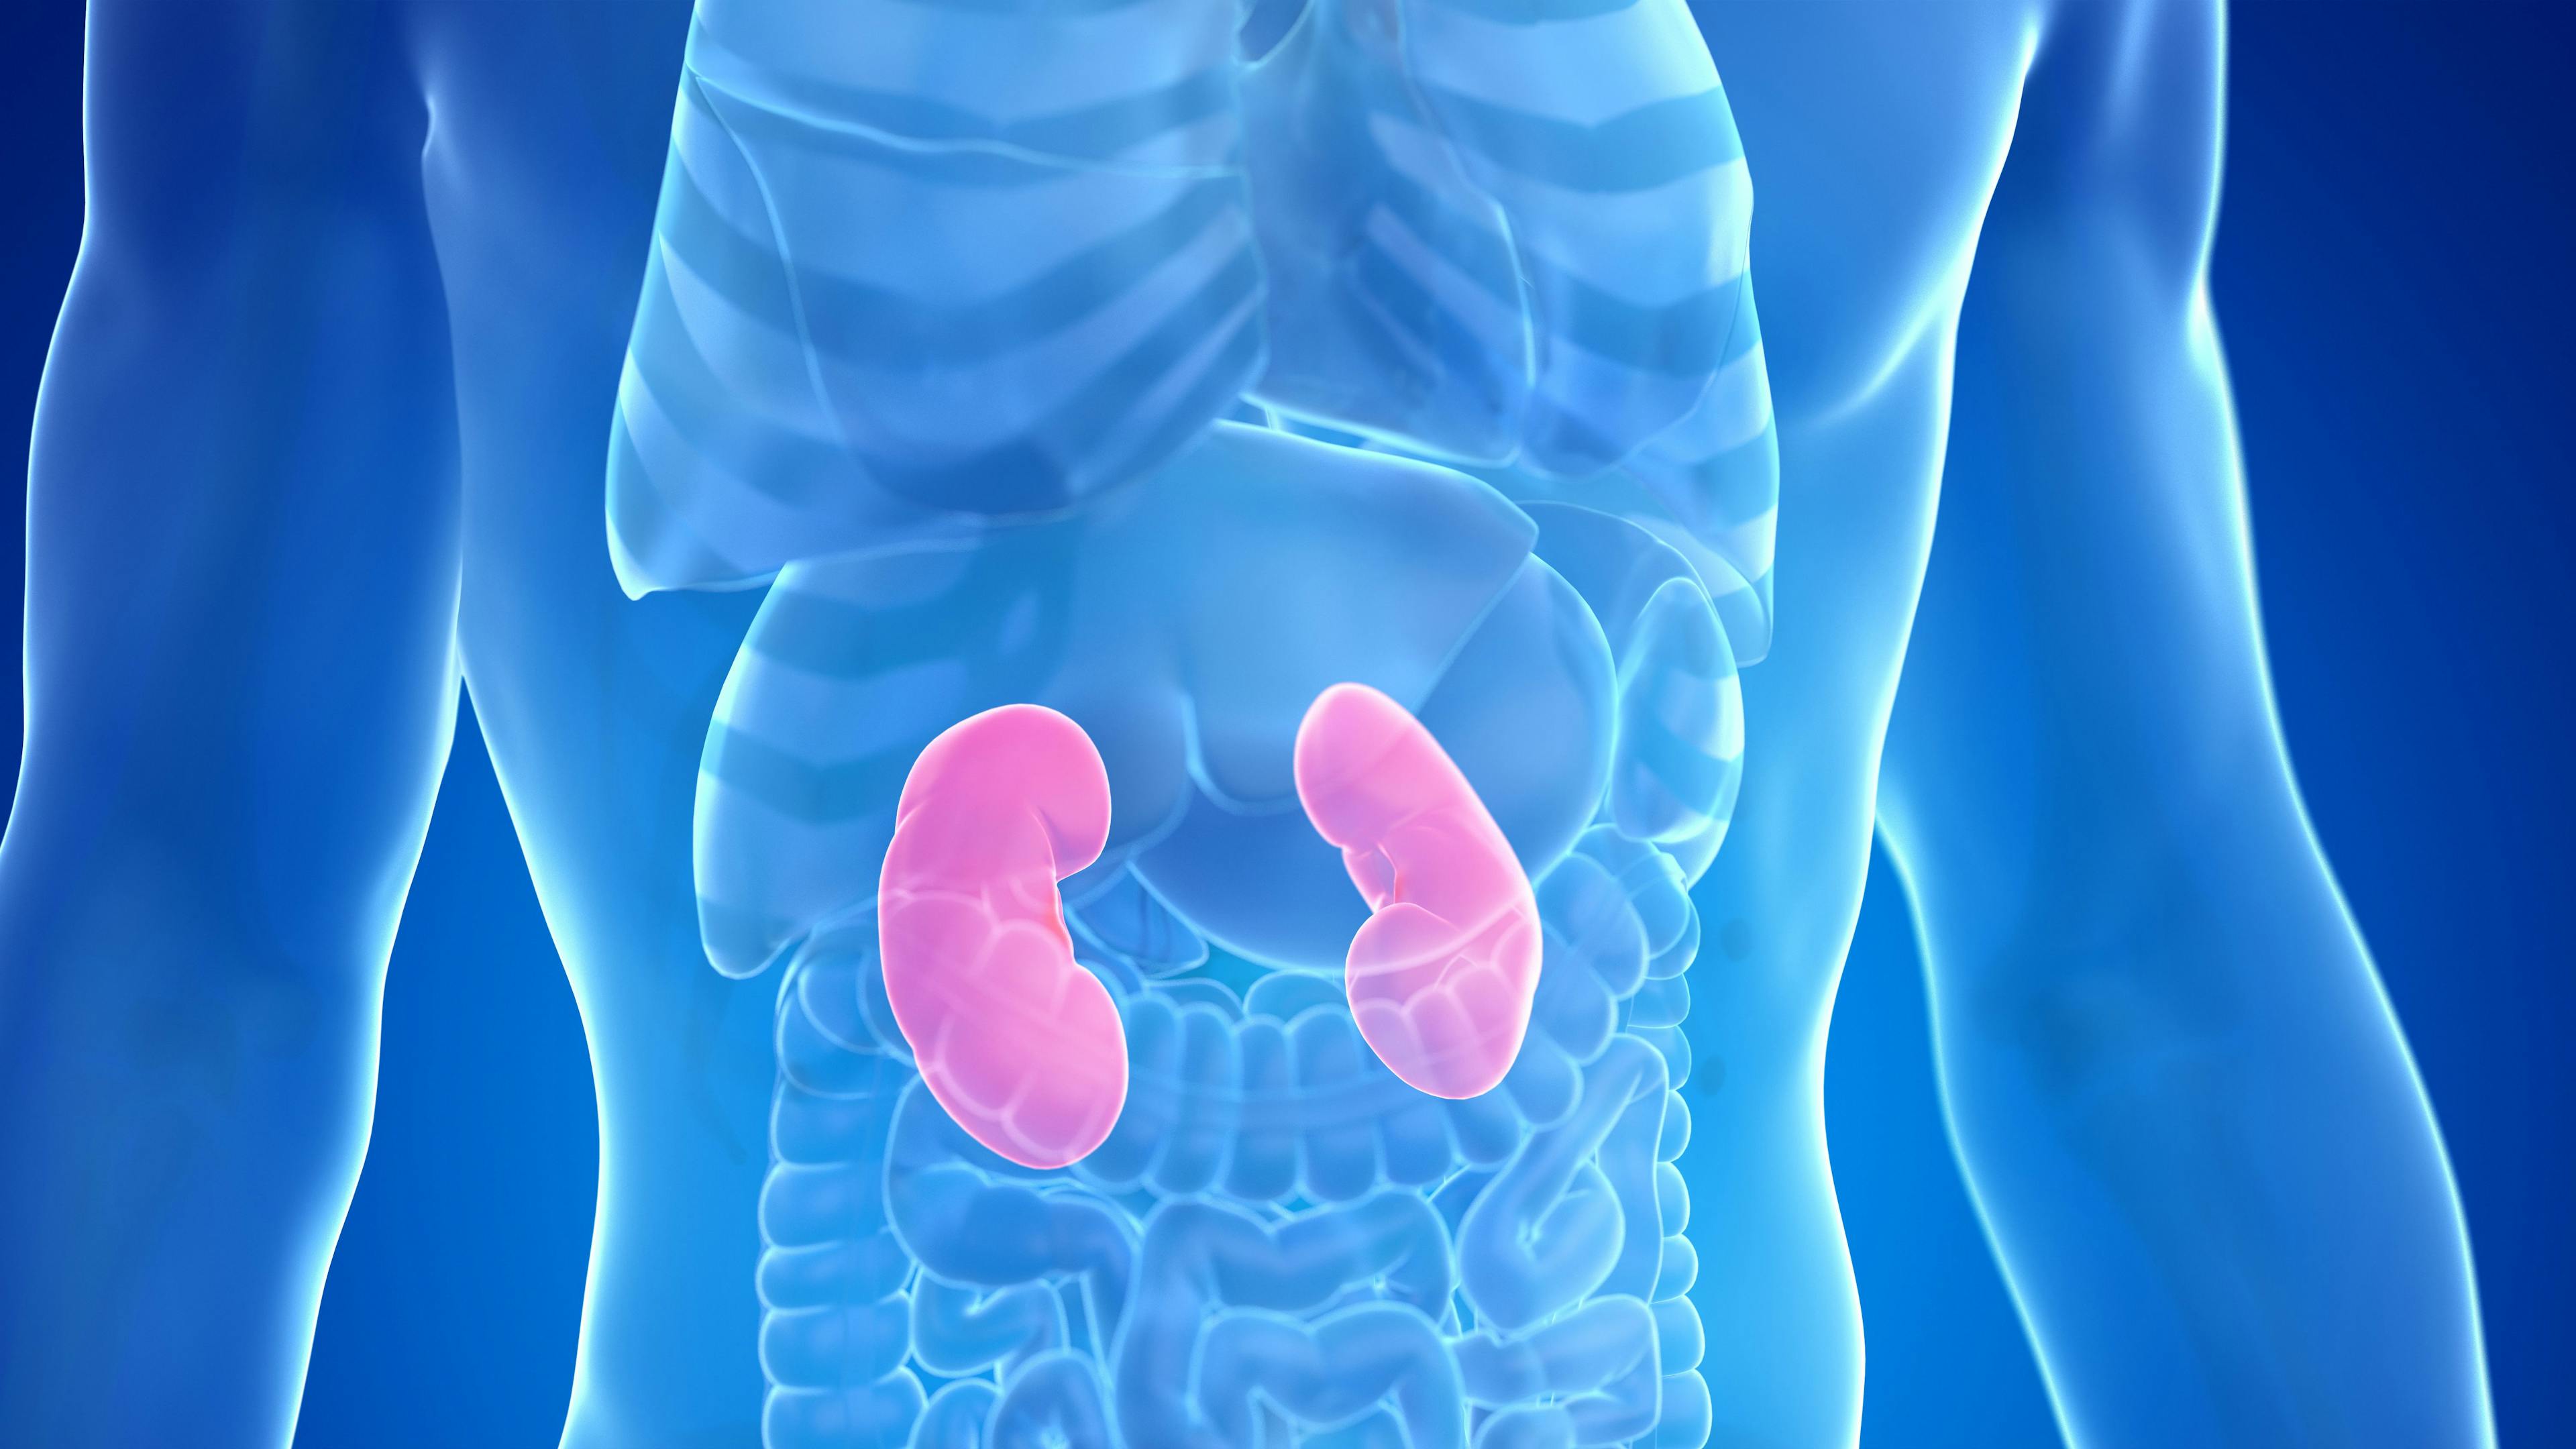 Kidneys highlighted in blue body | Image credit: © Sebastian Kaulitzki stock.adobe.com